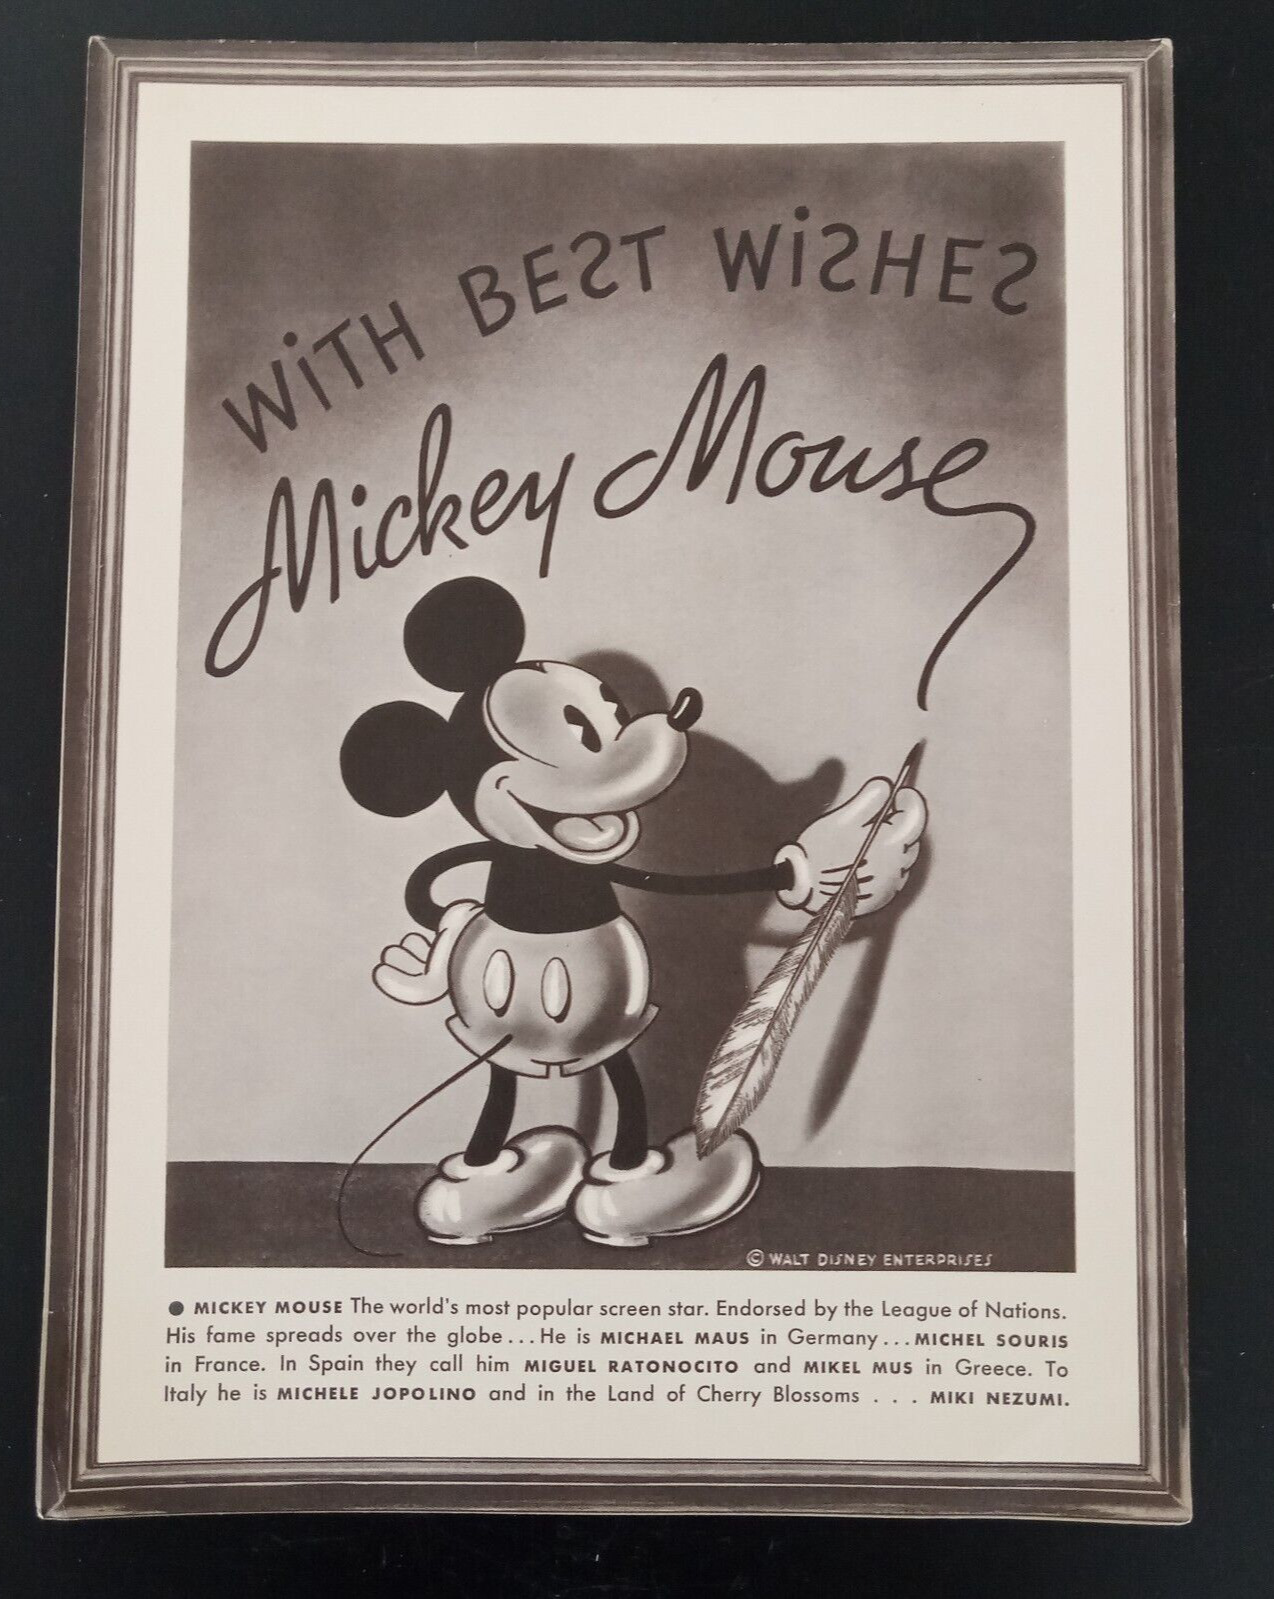 Mickey Mouse Congoleum Gold Seal Rugs Picture Walt Disney Enterprises c.1936